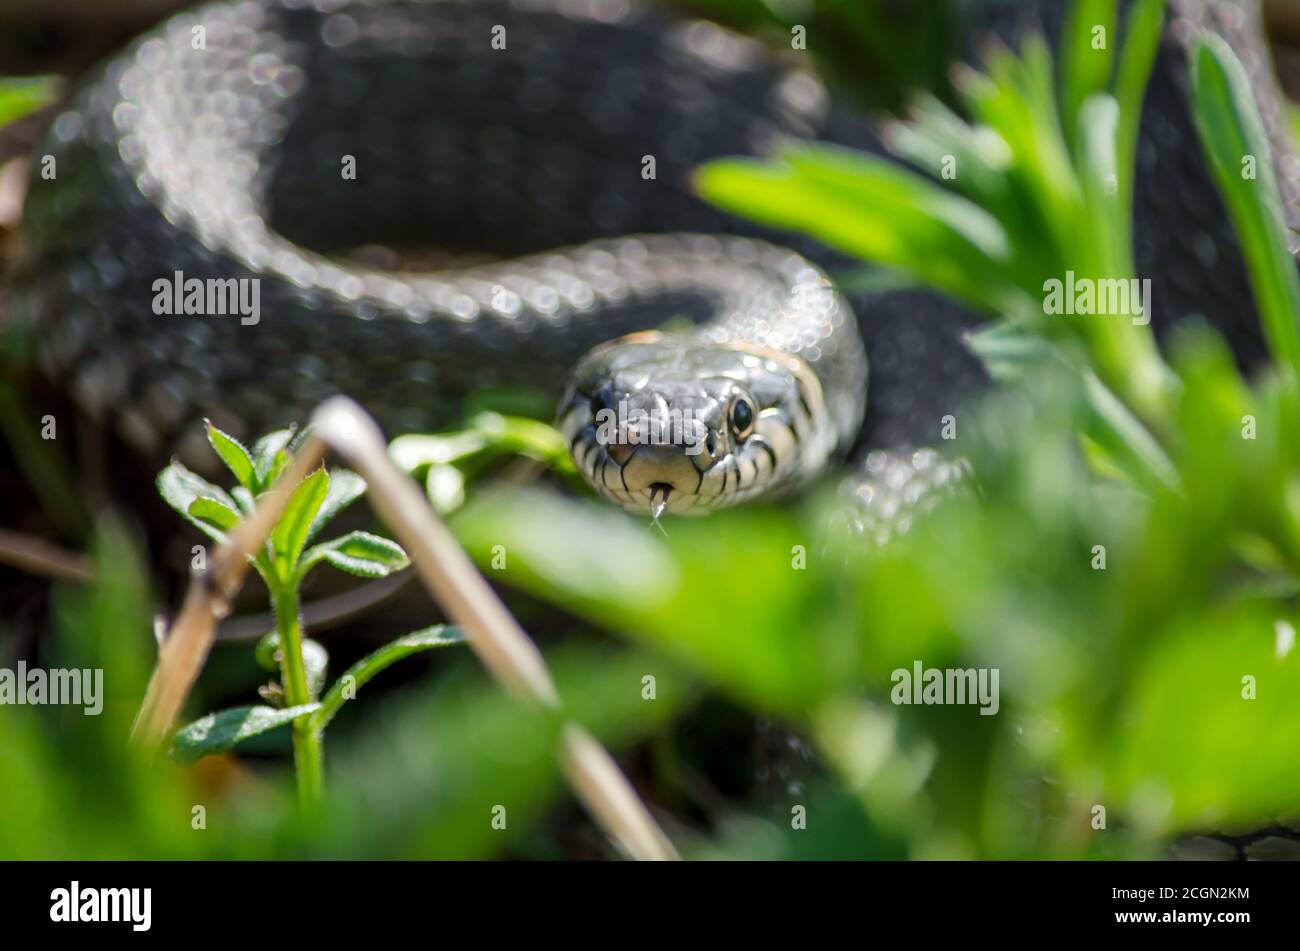 Grass snake lurking in the grass. Fauna of Ukraine. Shallow depth of field, closeup. Stock Photo